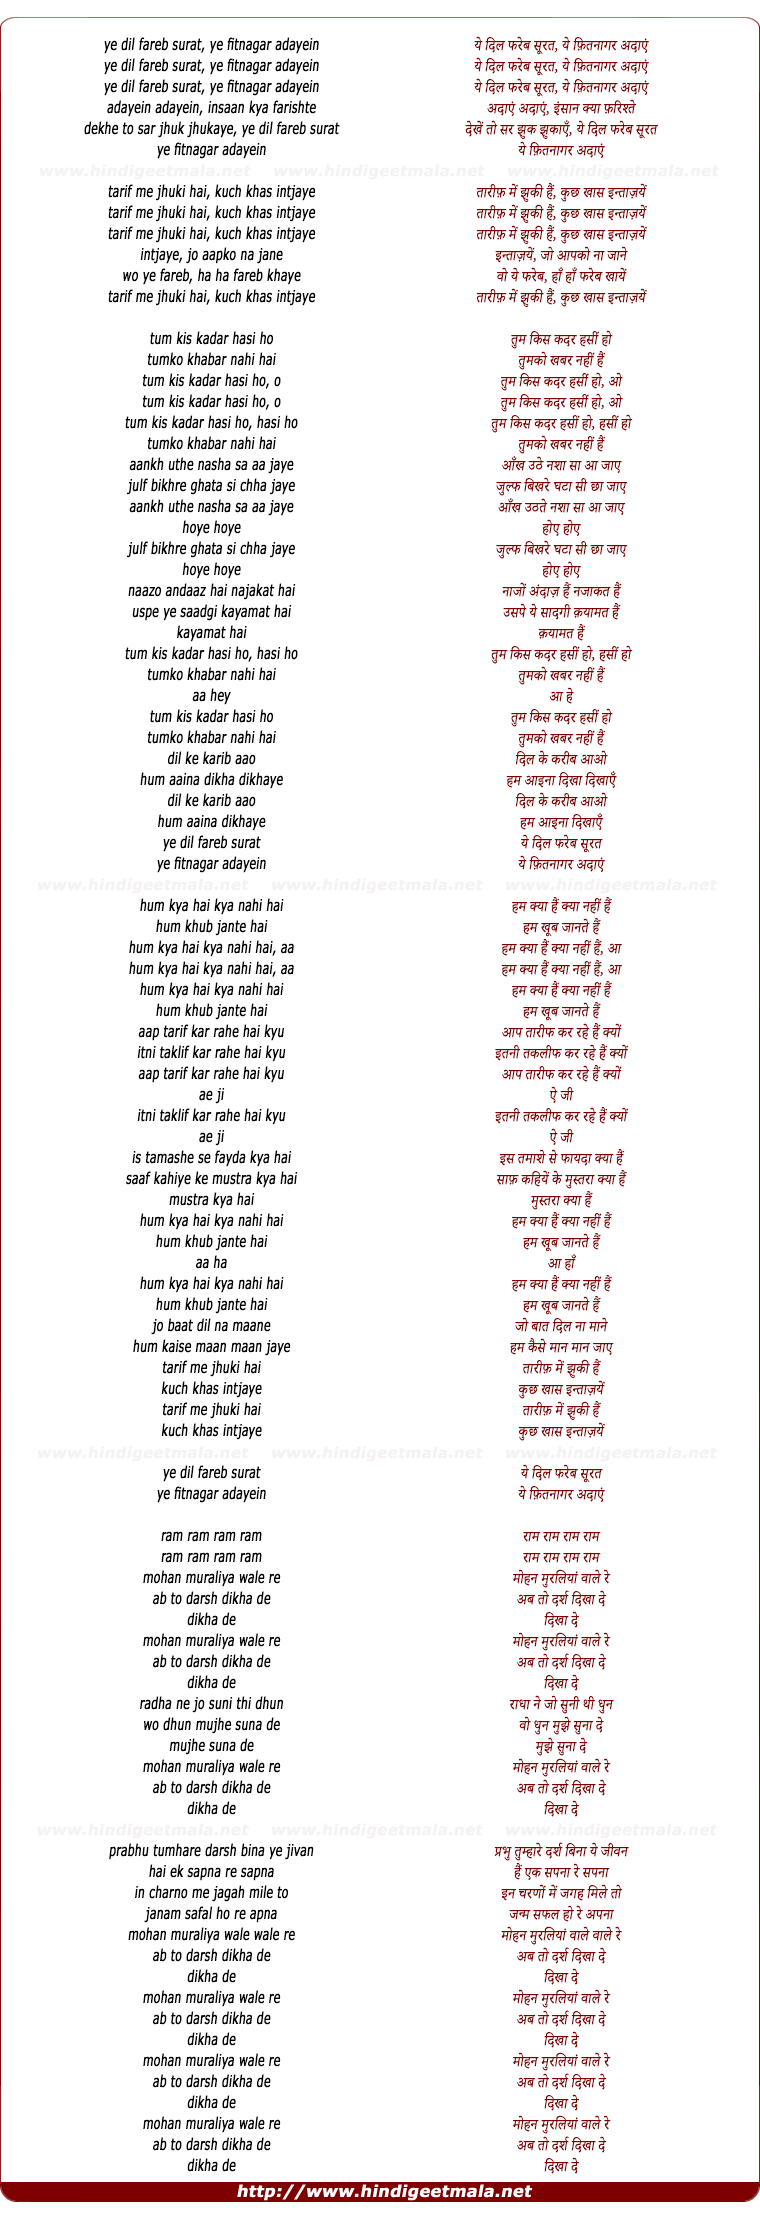 lyrics of song Ye Dil Fareb Suratt, Ye Fitnagar Adaye